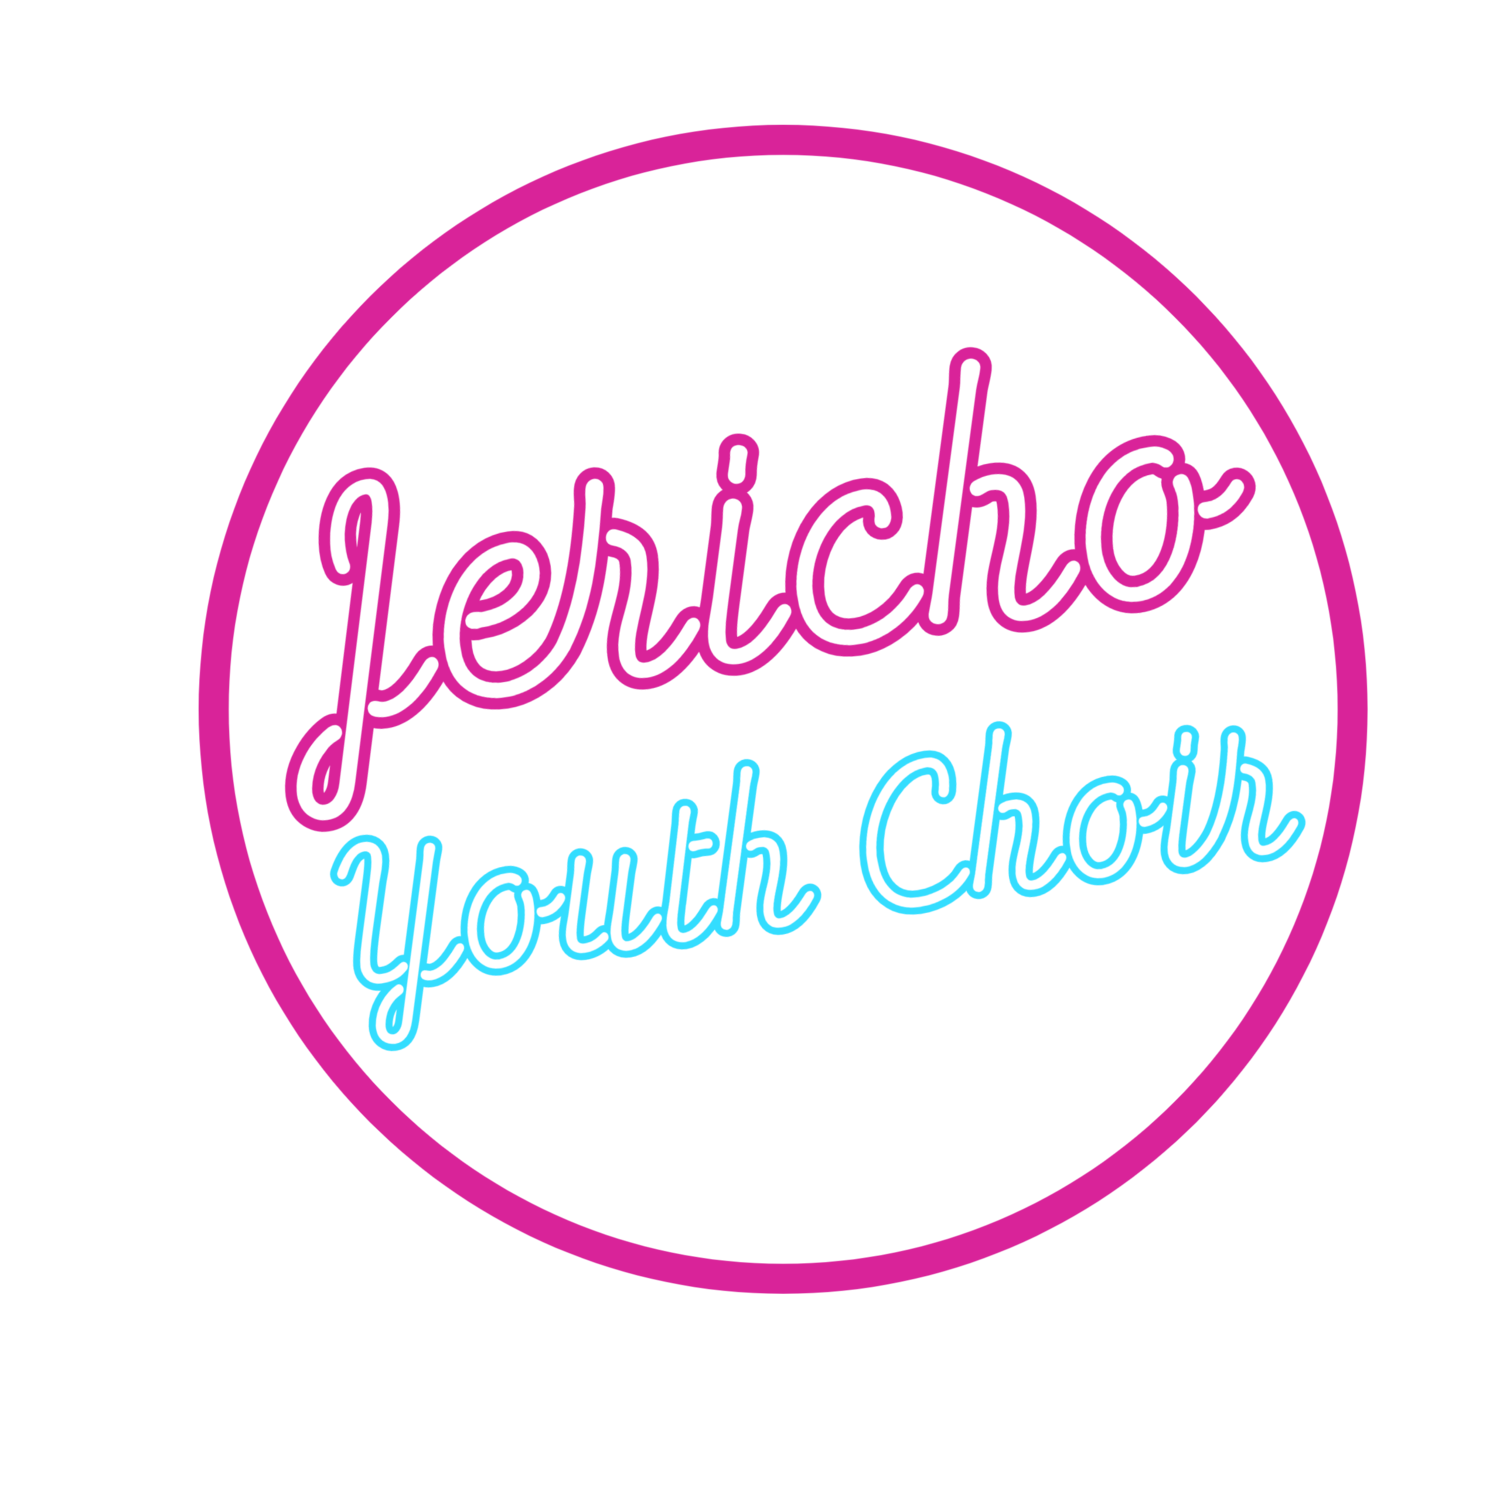 Jericho Youth Choir